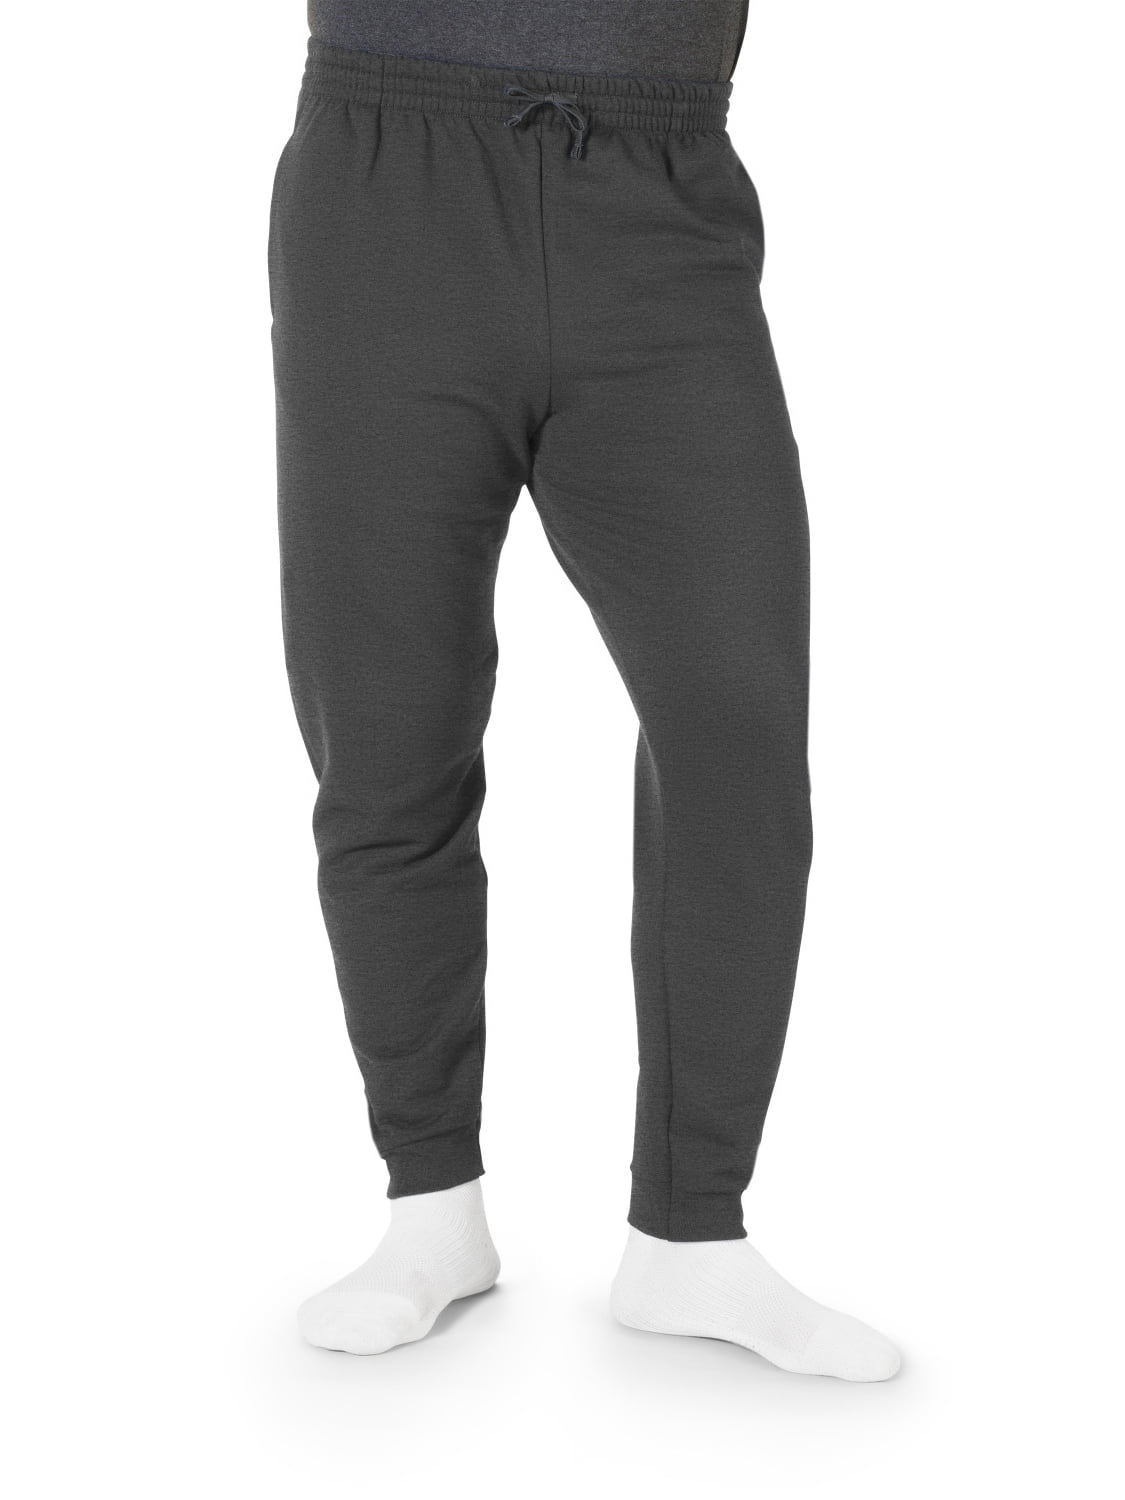 Jerzees Mens Dark Blue Sweatpants Size XL - beyond exchange